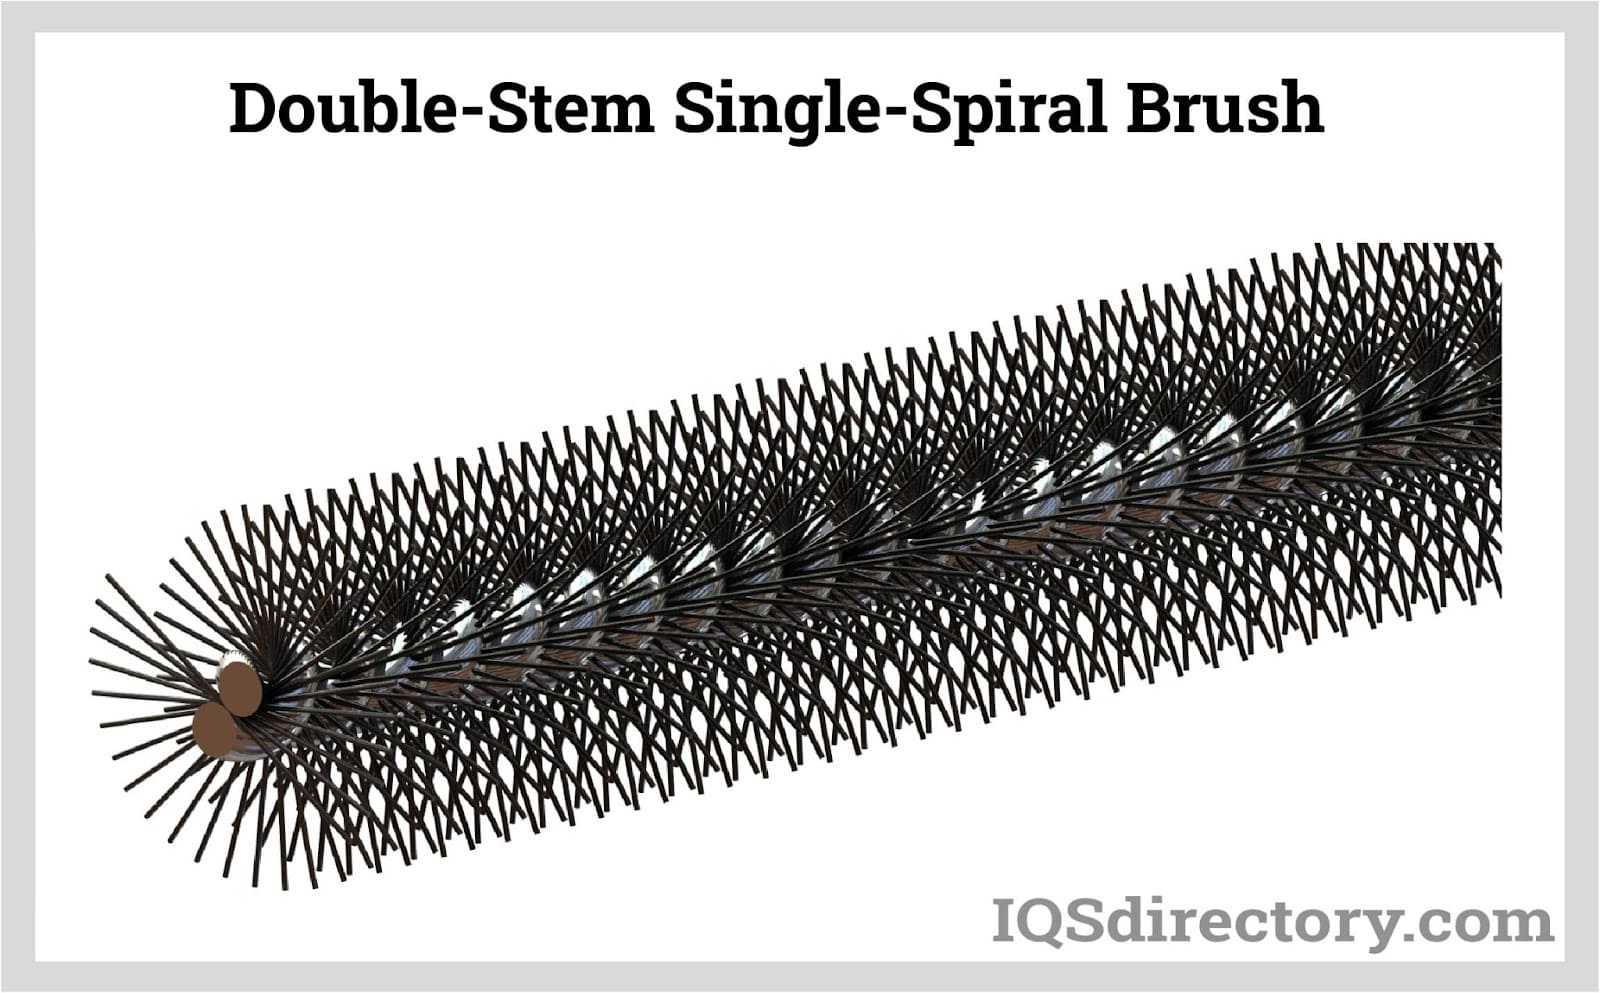 Double-stem-single-spiral brush